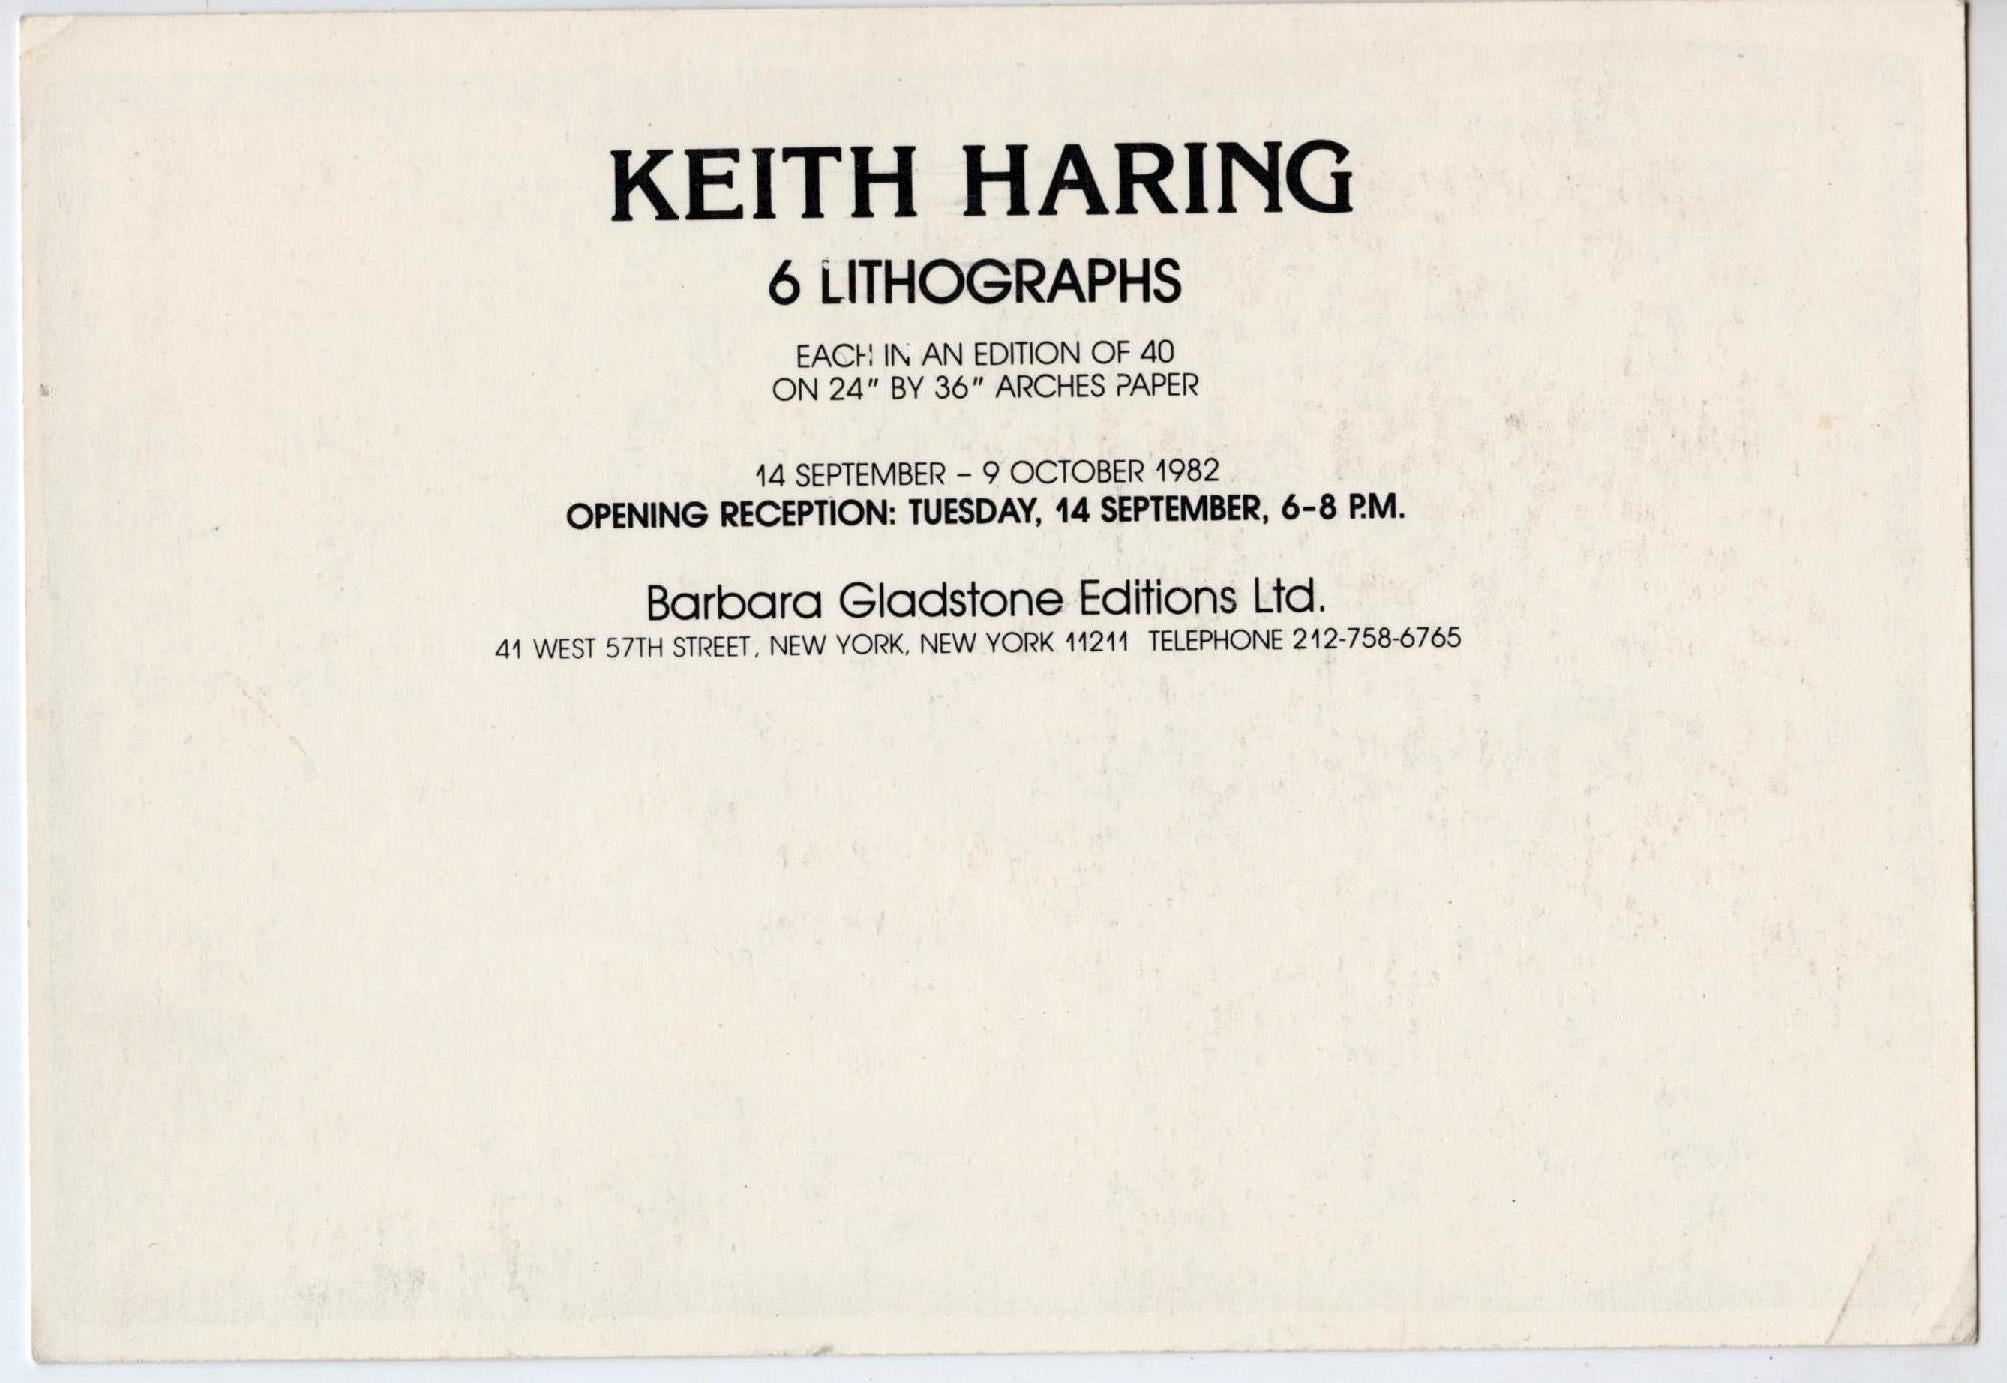 Keith Haring at Barbara Gladstone 1982 (Keith Haring 6 Lithographs announcement) 1